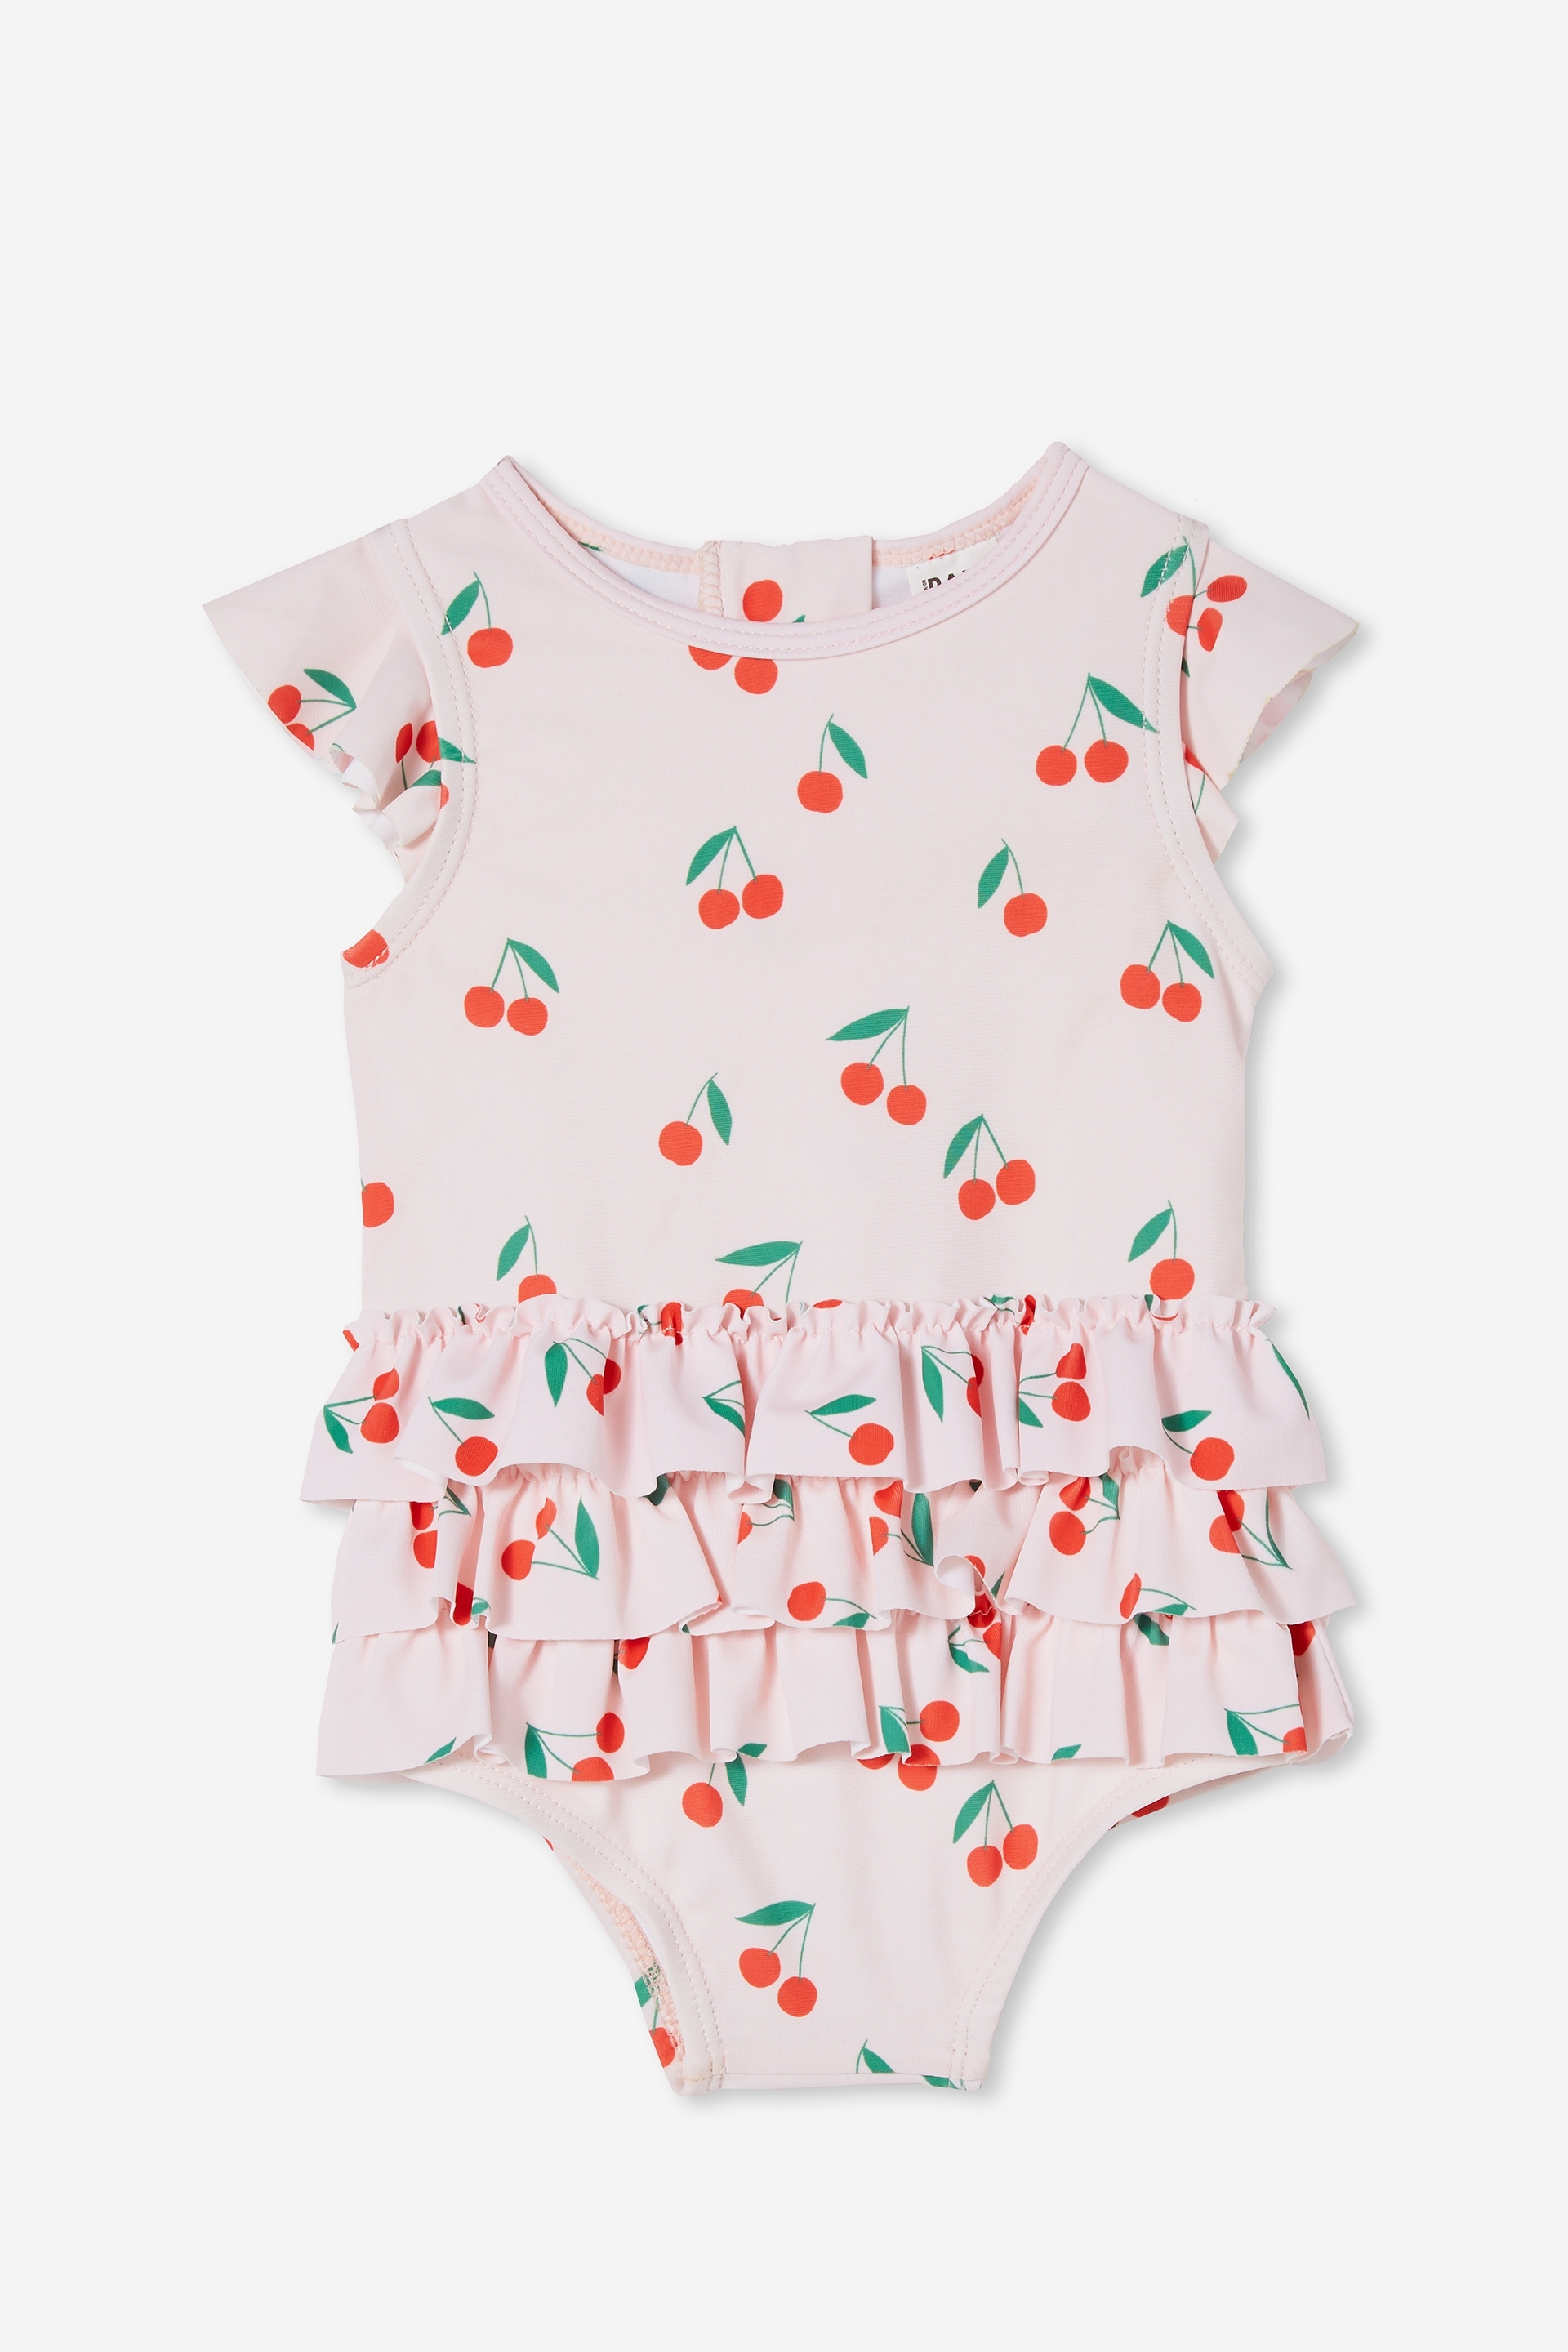 Cotton On Kids - Charlene Ruffle Swimsuit - Crystal pink/red orange mini cheryl cherries